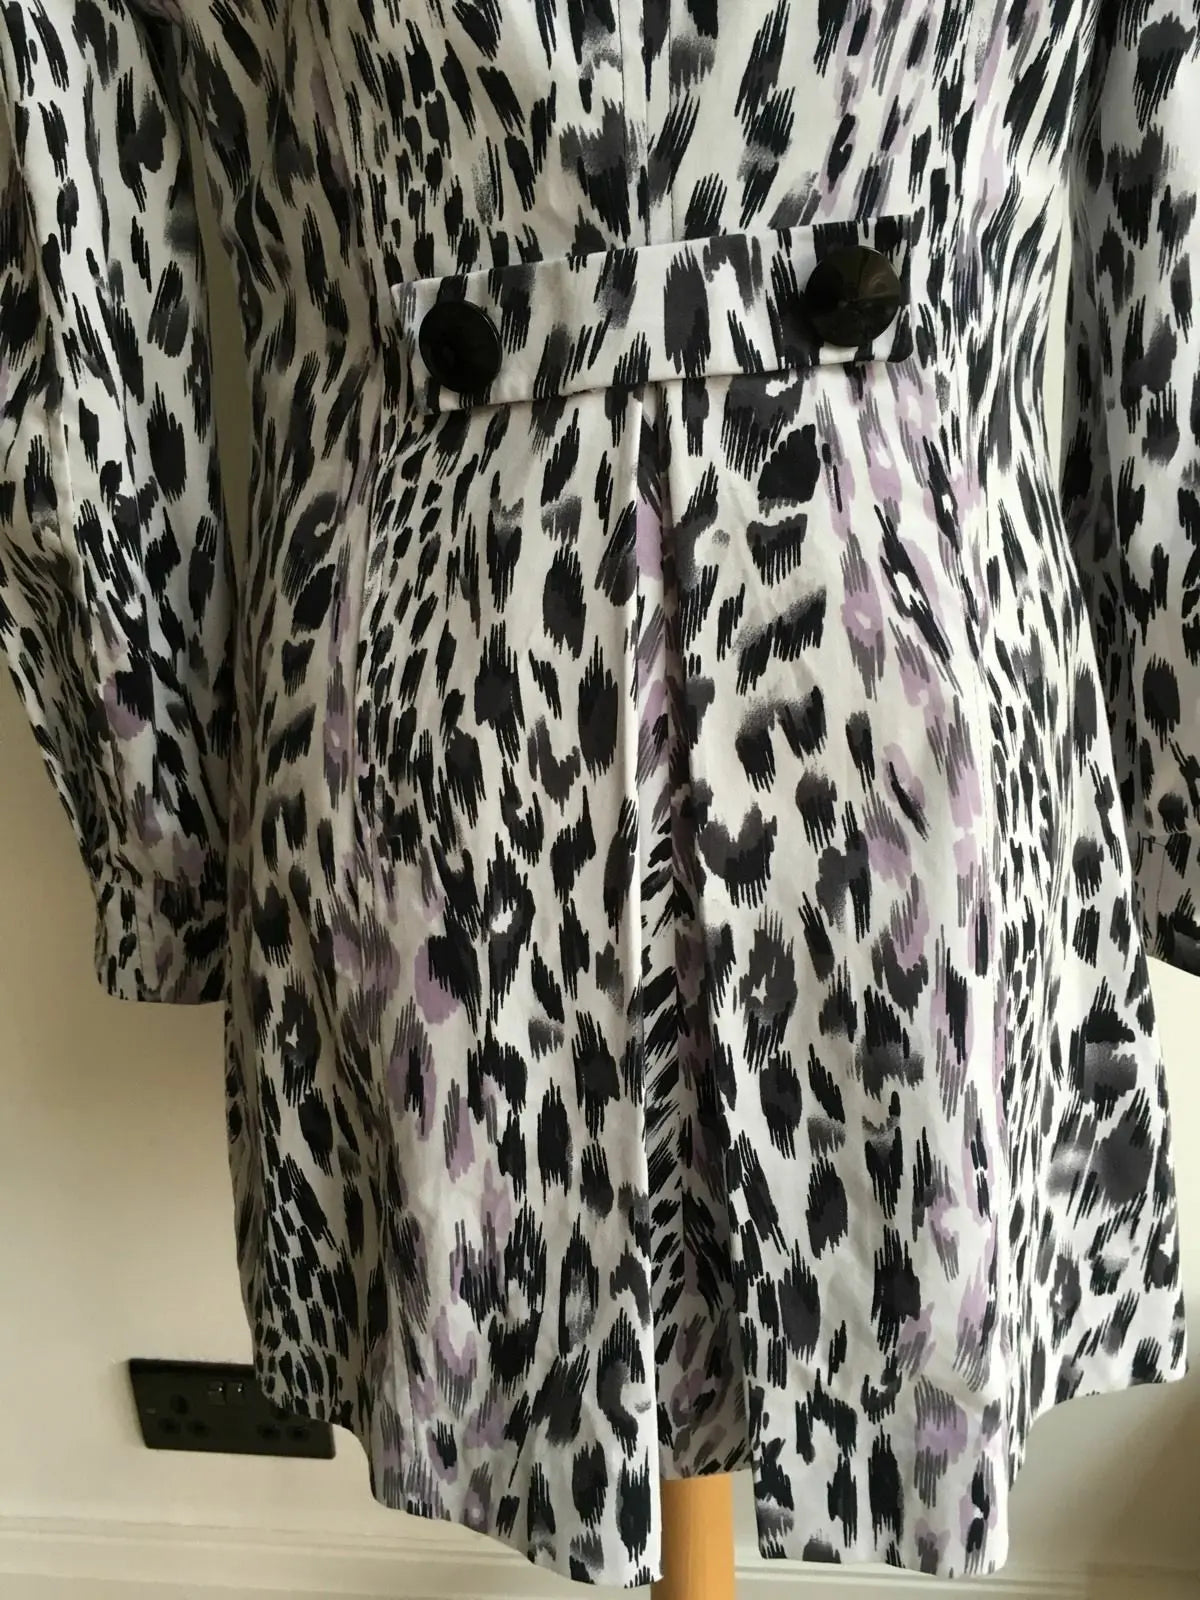 M&S Per Una Black/lilac Leopard Print Cotton Mix Lined Coat in size 10 Rrp£65 Per Una